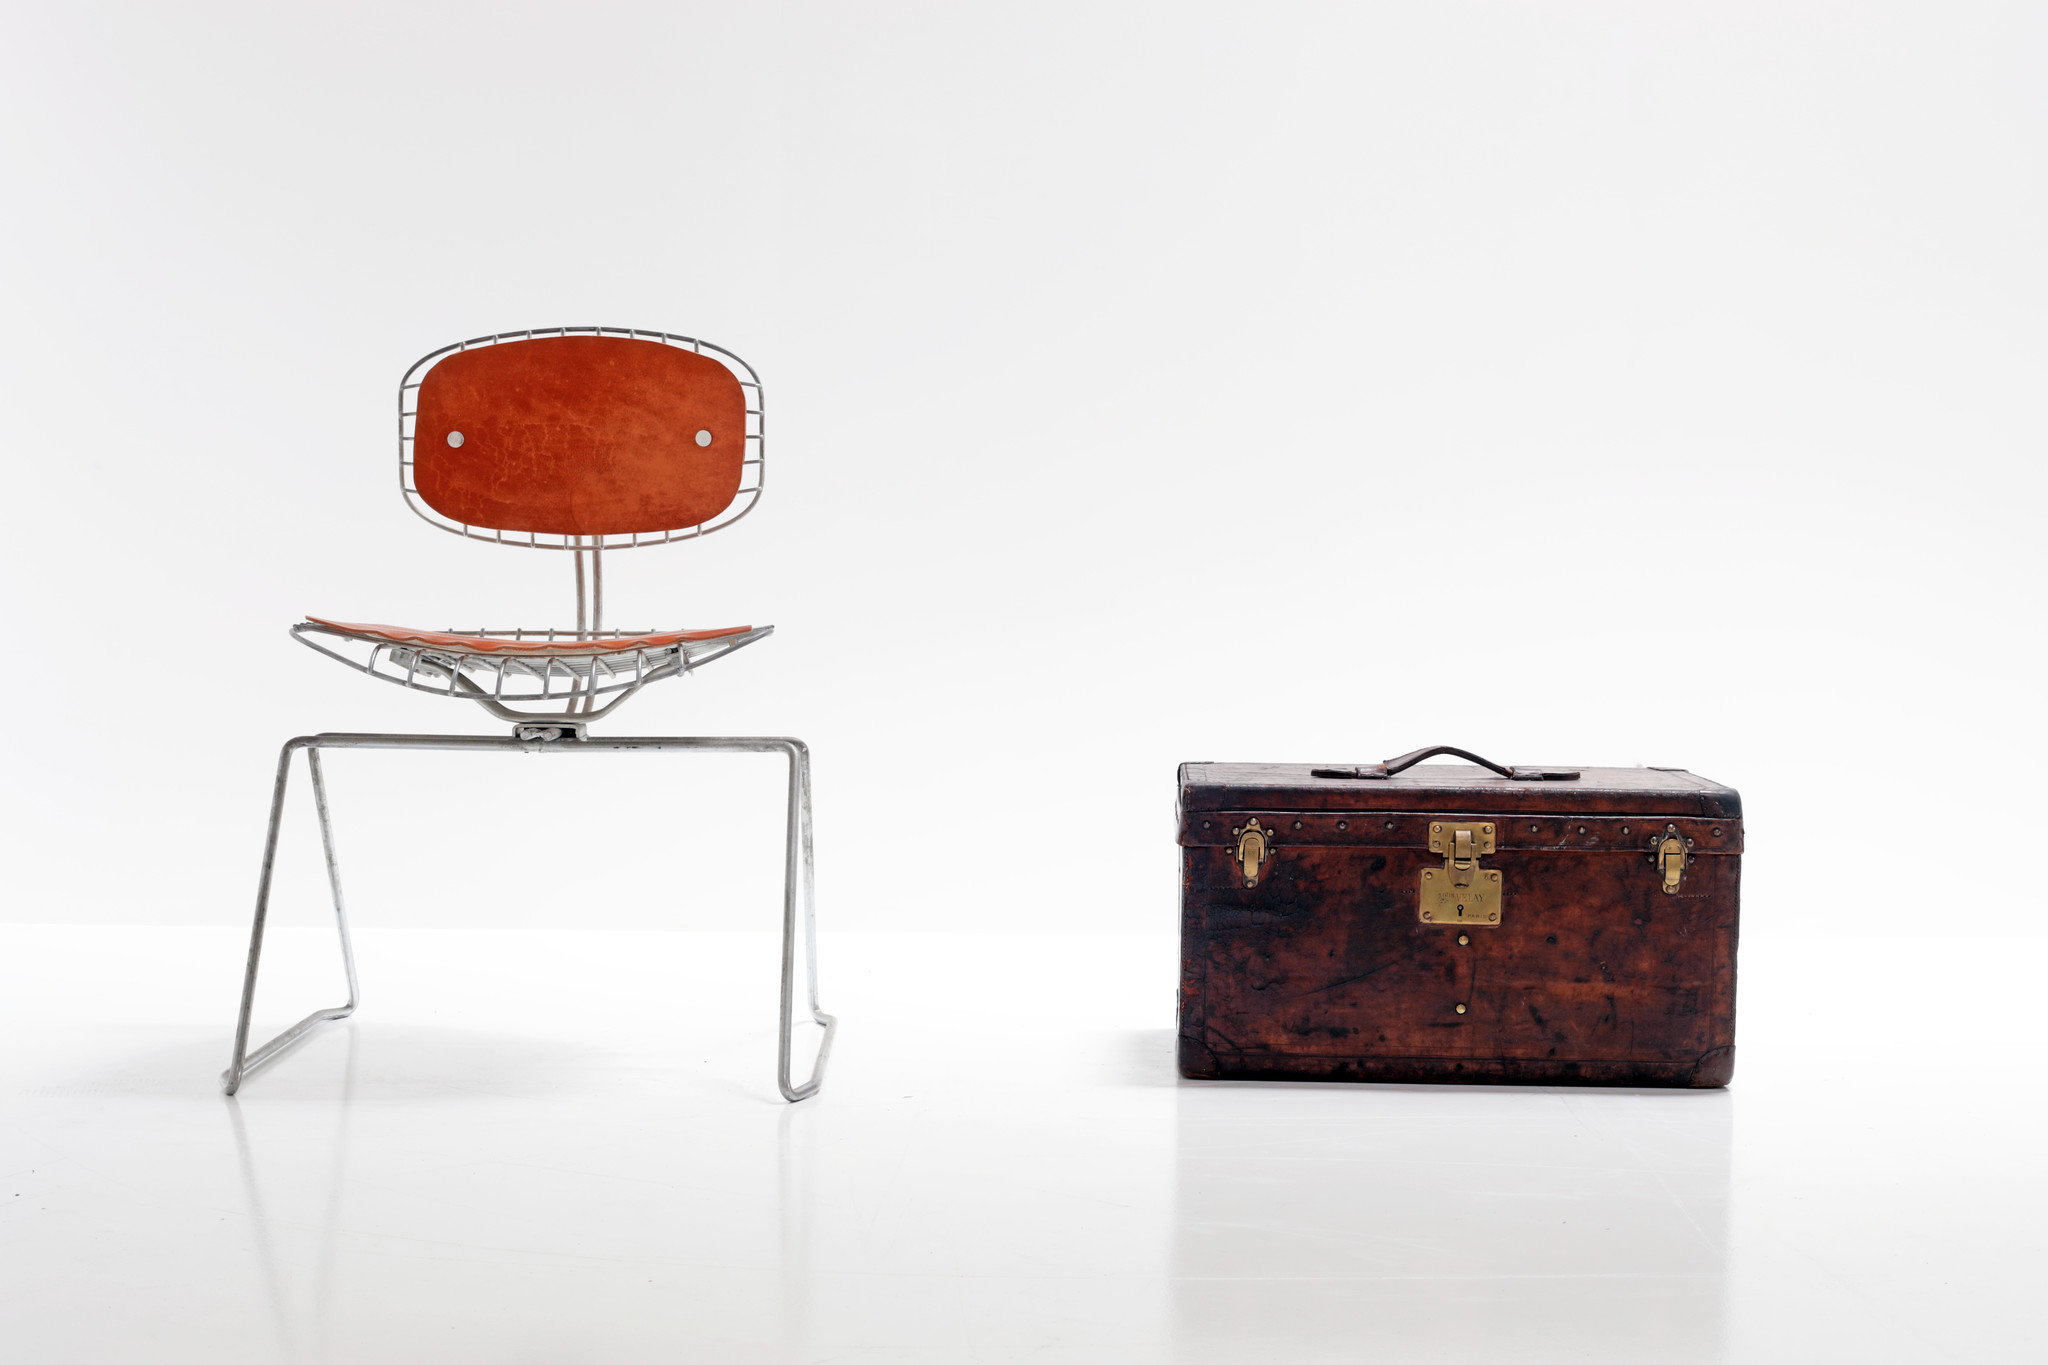 Louis Vuitton Koffer by Louis Vuitton (Co.) on artnet